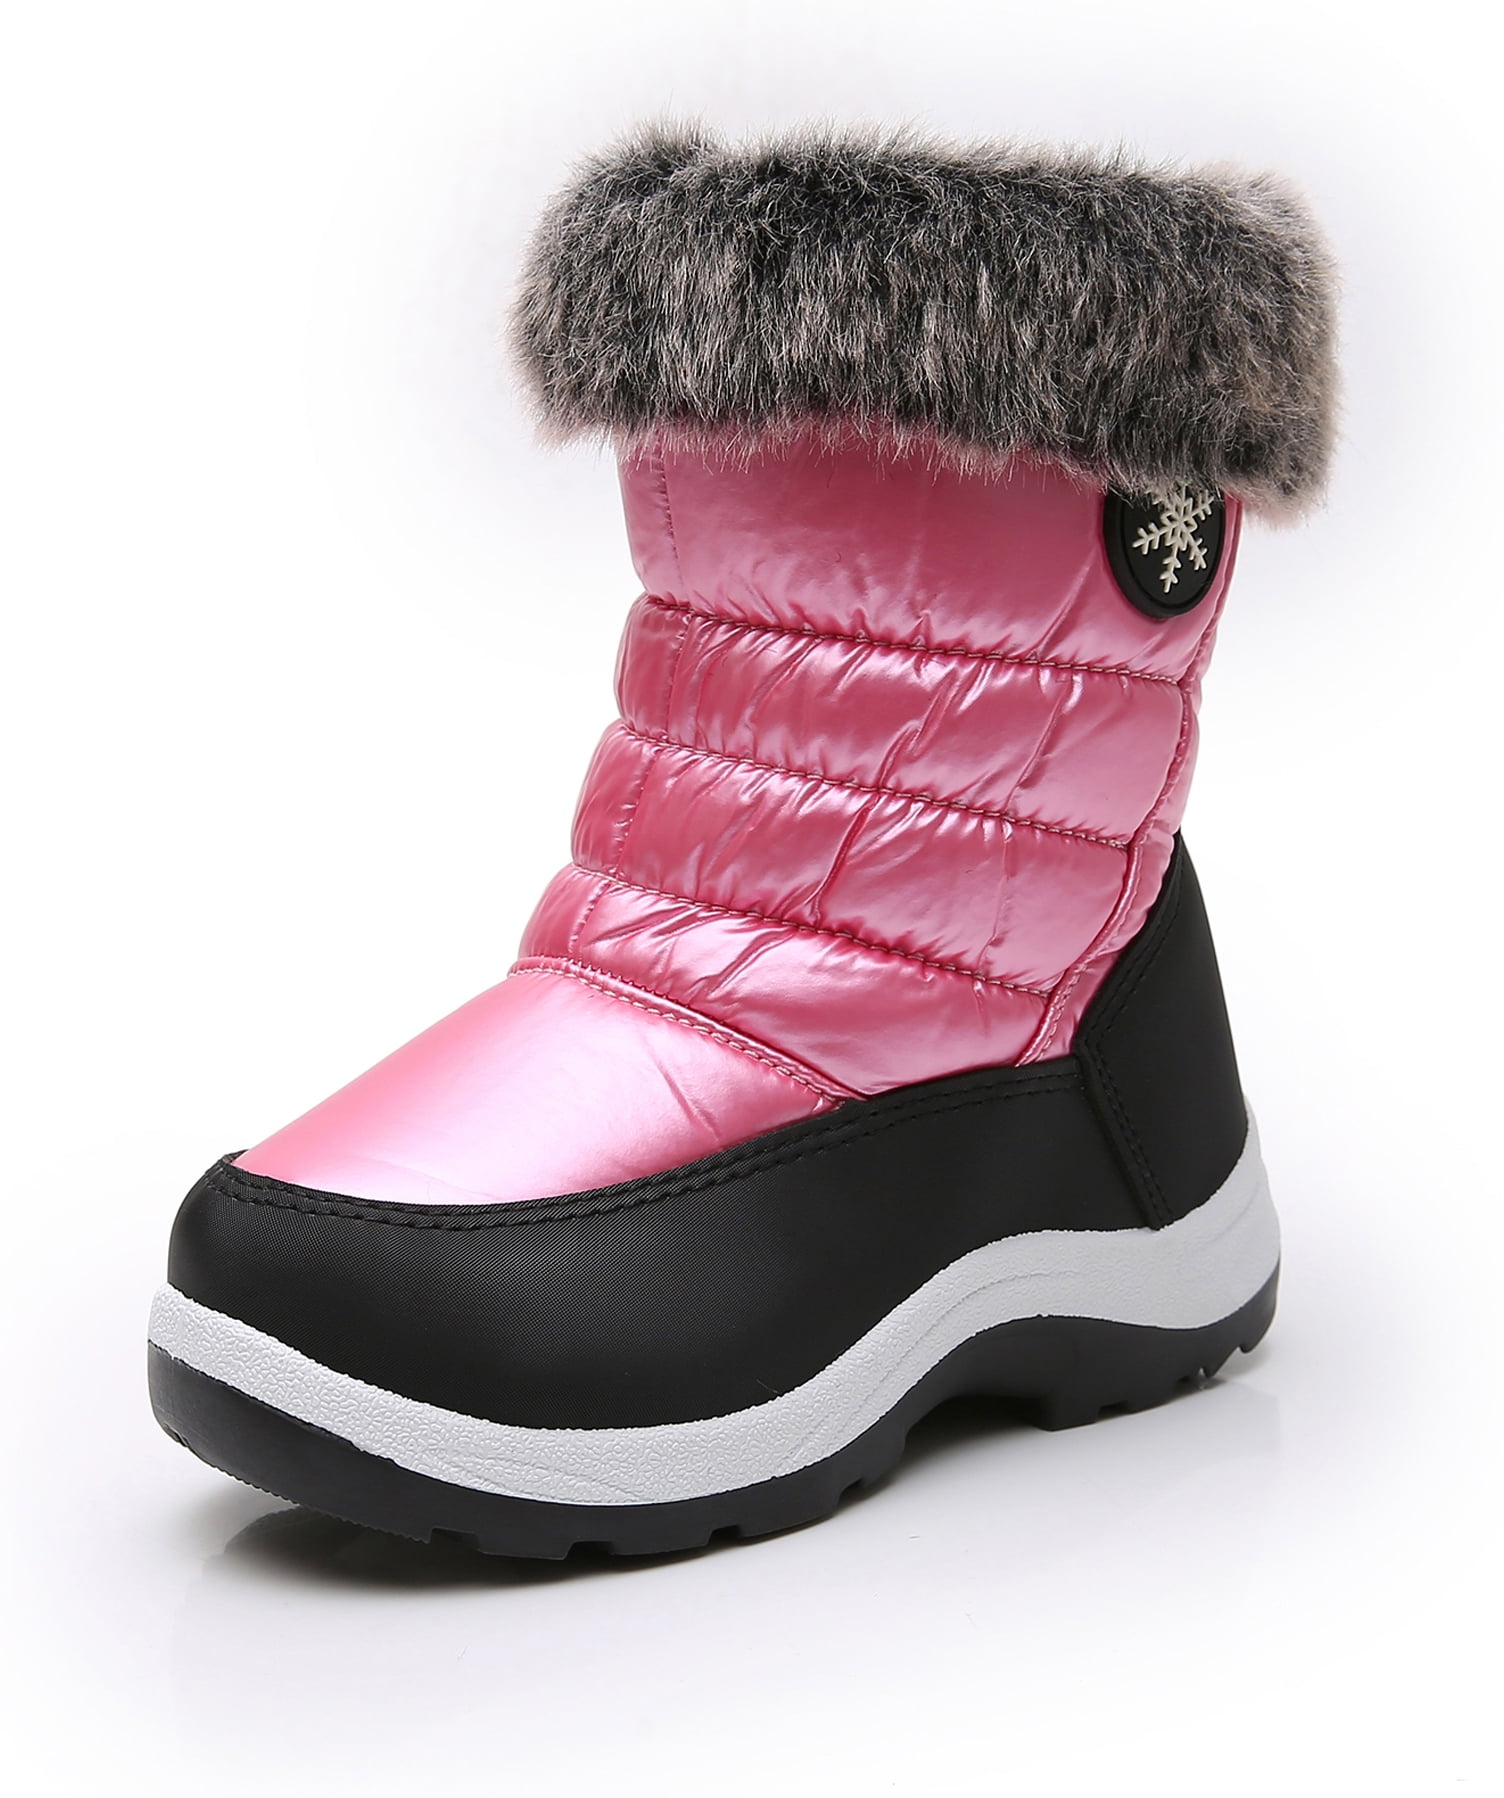 Toddler/Little Apakowa Kids Girls Insulated Fur Winter Warm Snow Boots 